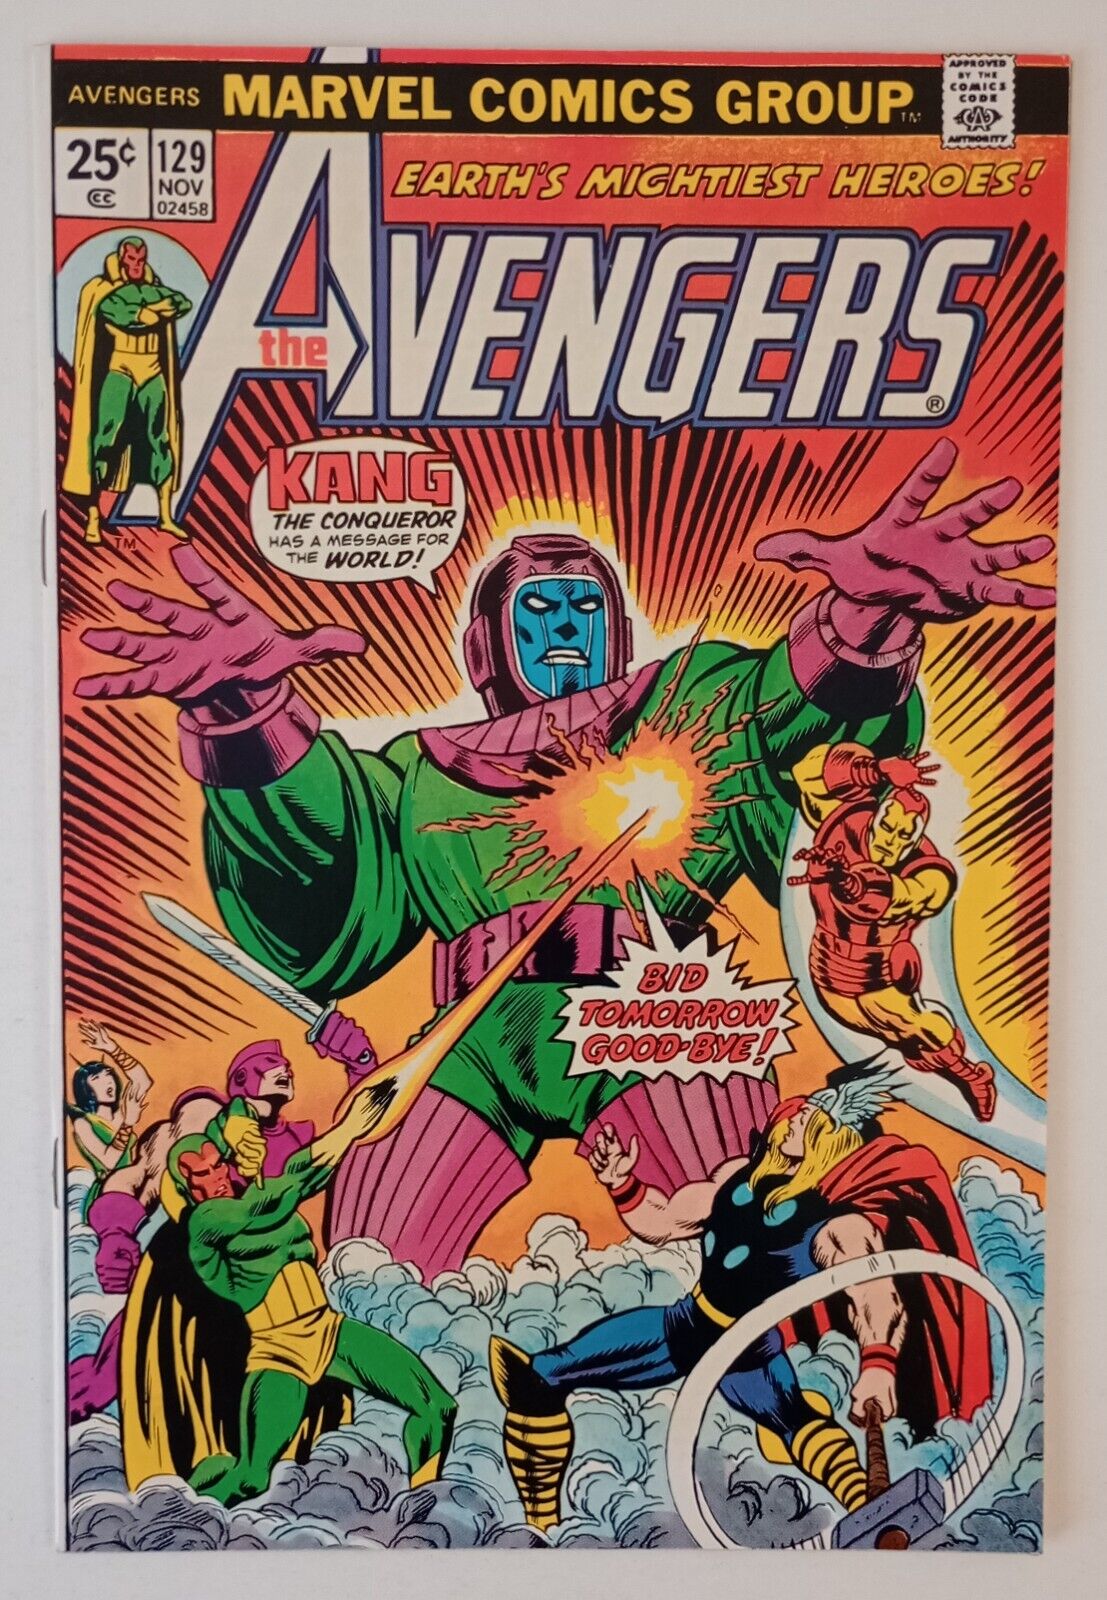 Avengers #129 (Bid Tomorrow Goodbye/Kang) Key 1974